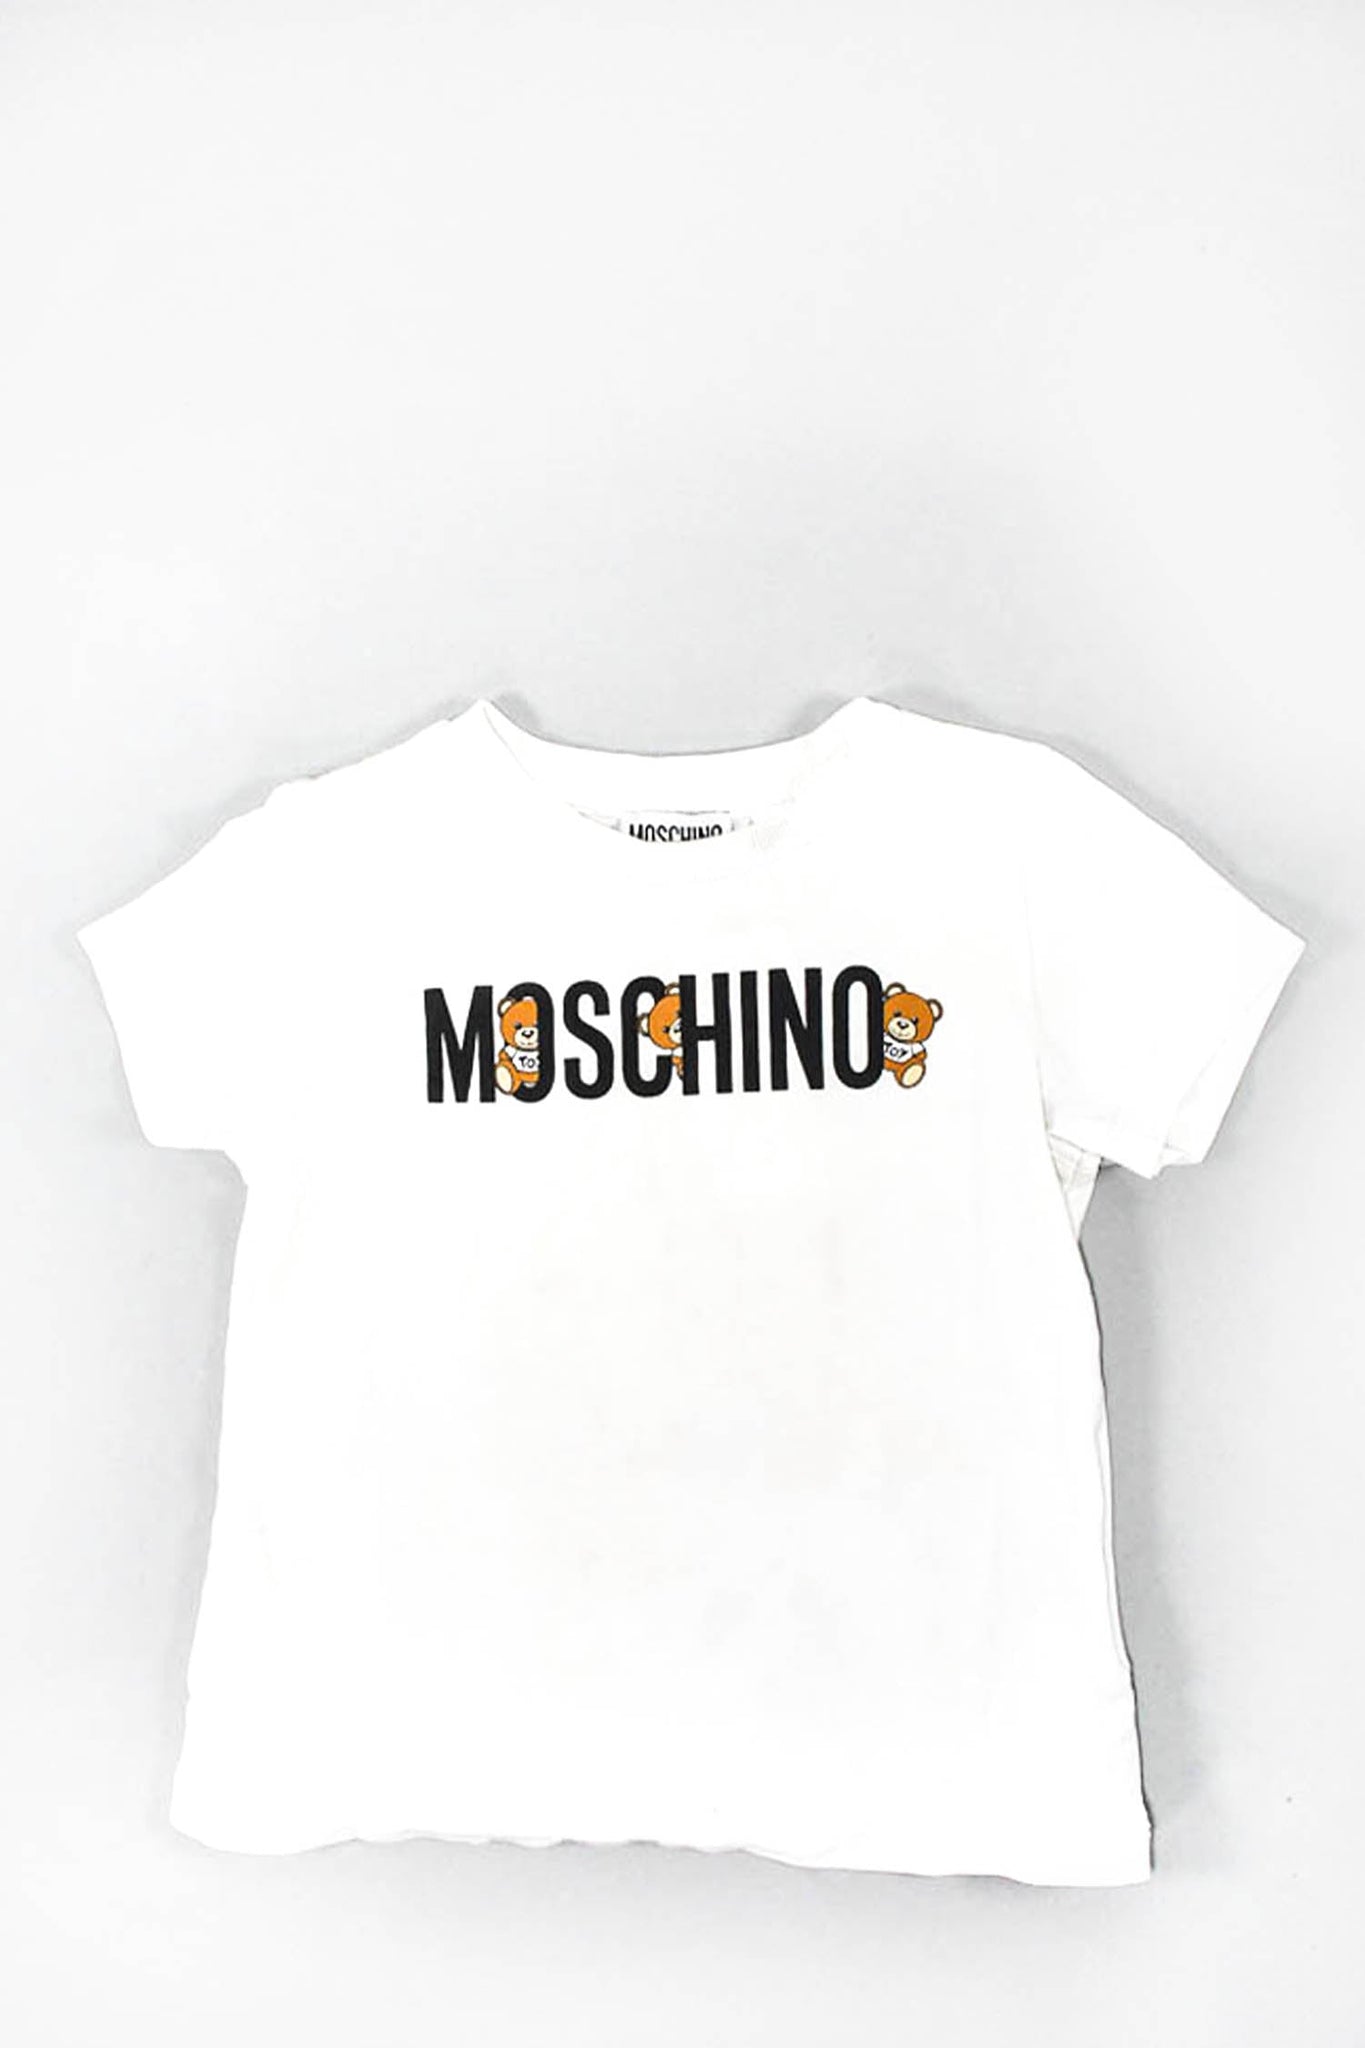 Moschino Teddy White Logo T-Shirt Size 4M Kids